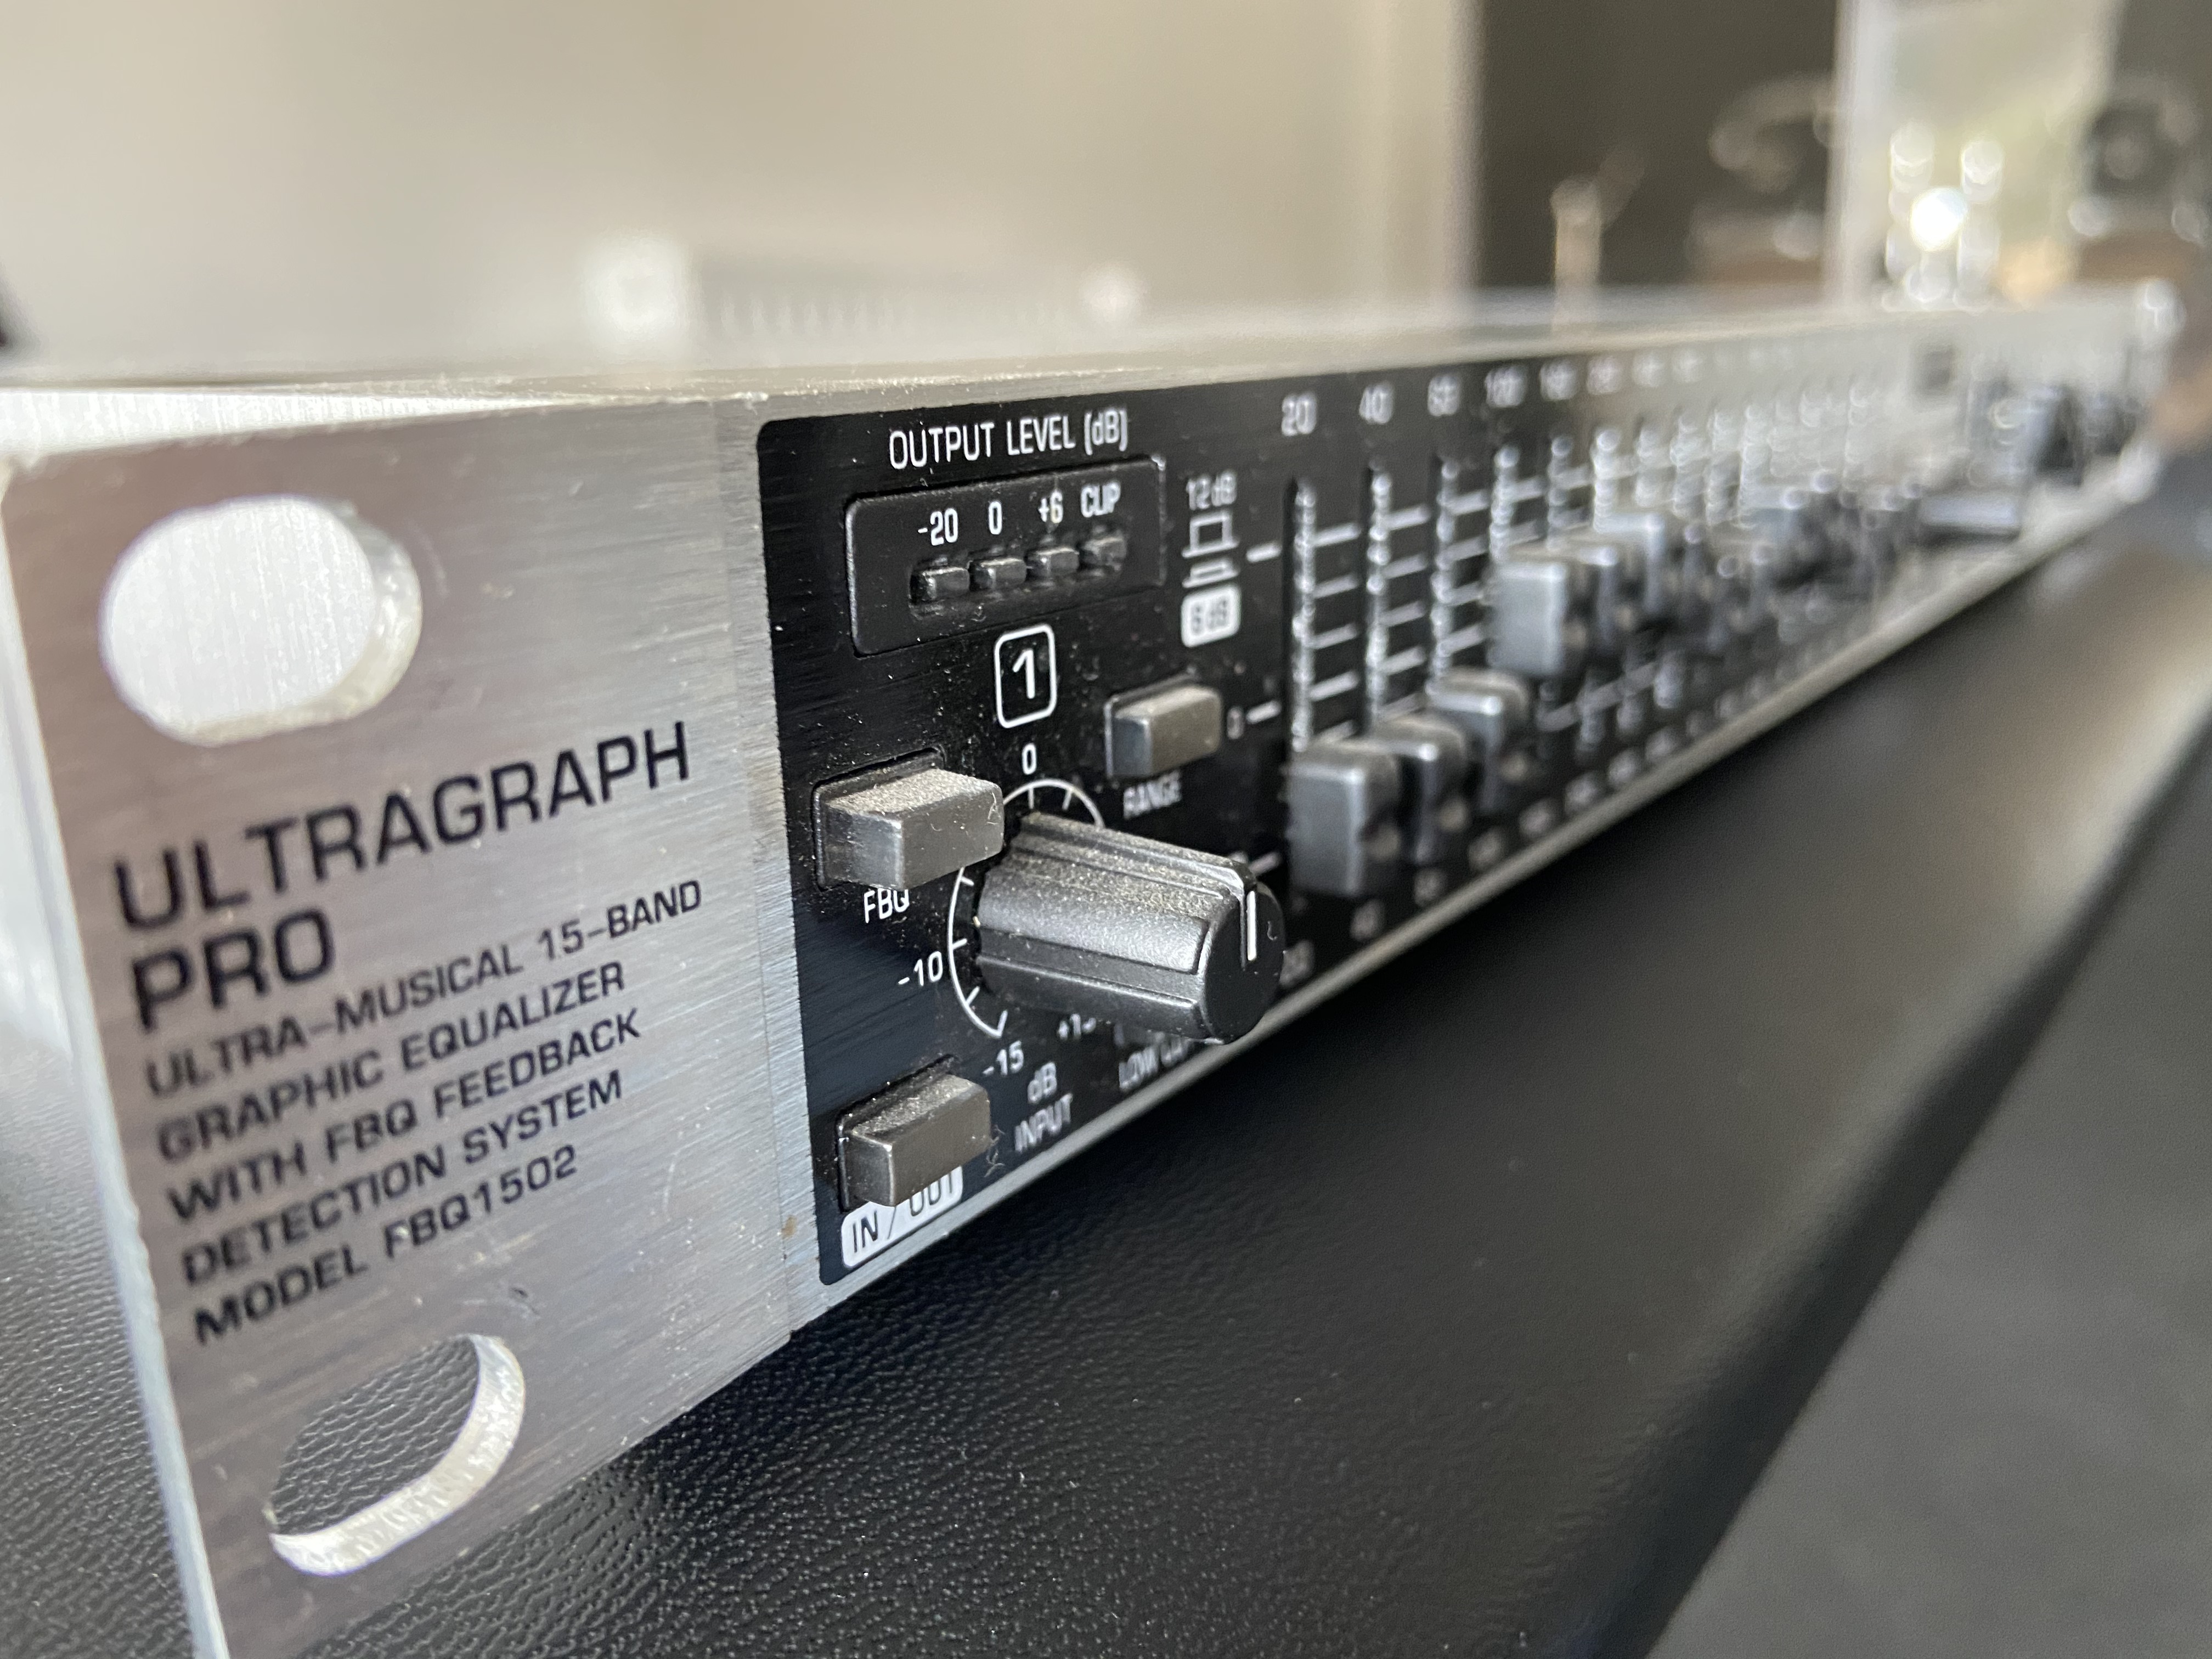 Ultragraph Pro FBQ1502 - Behringer Ultragraph Pro FBQ1502 